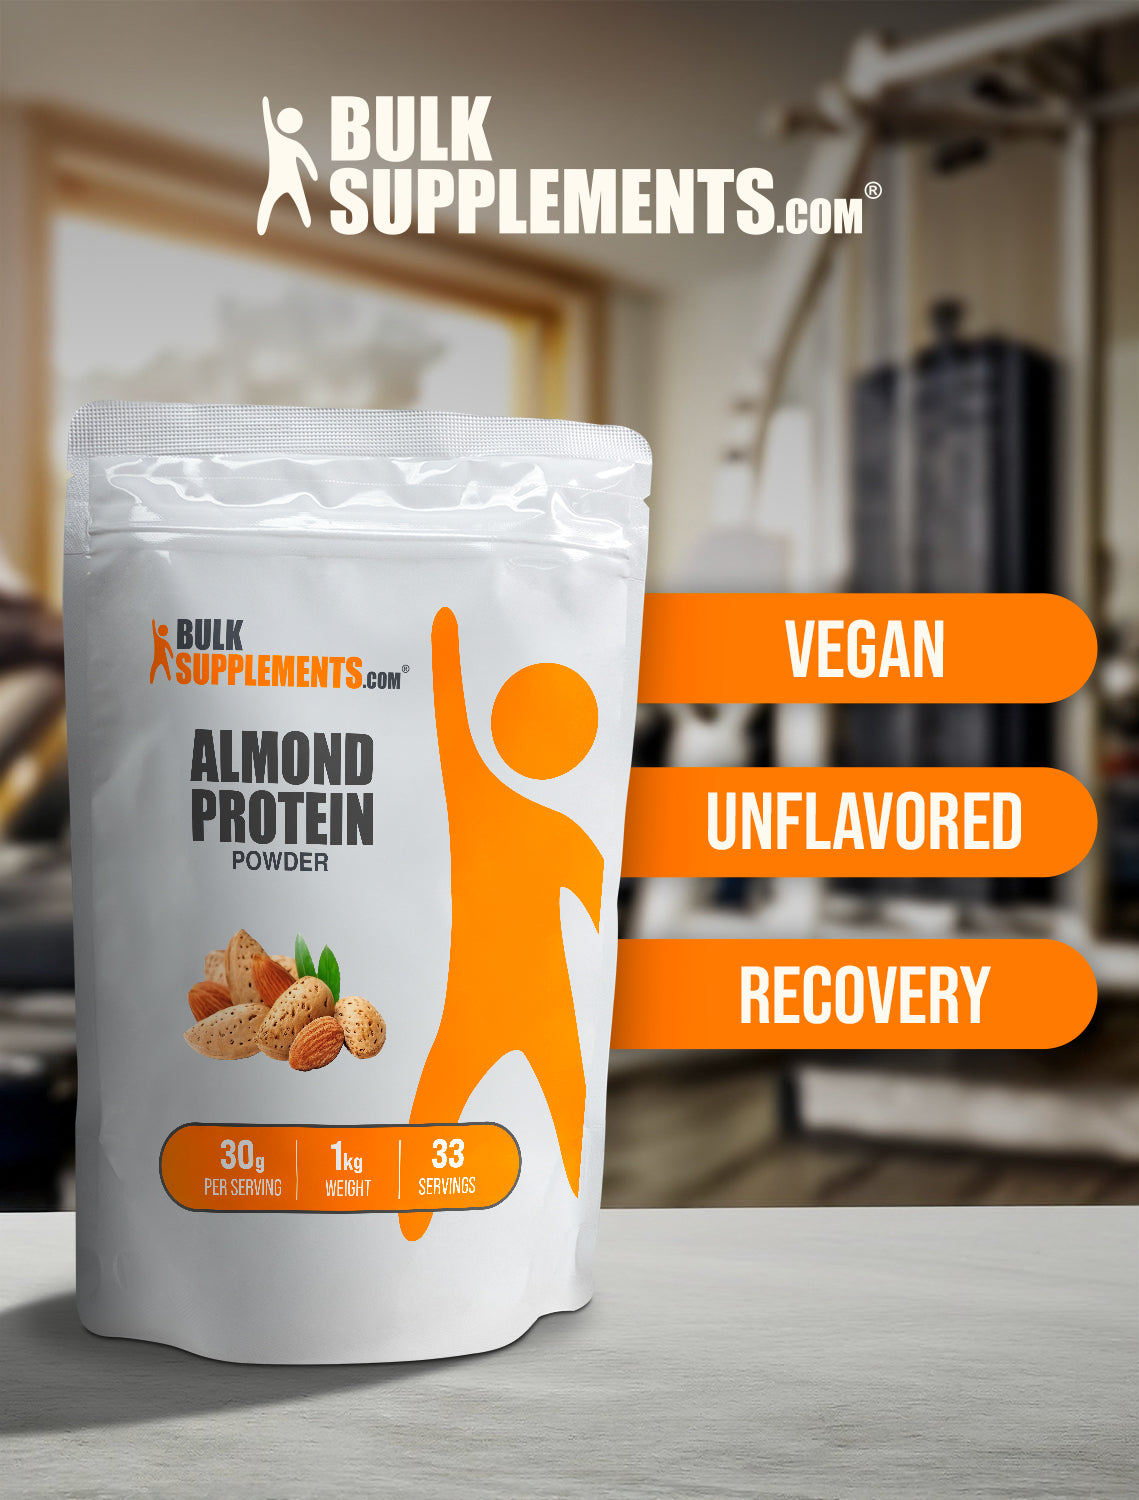 Almond protein powder 1kg keywords image